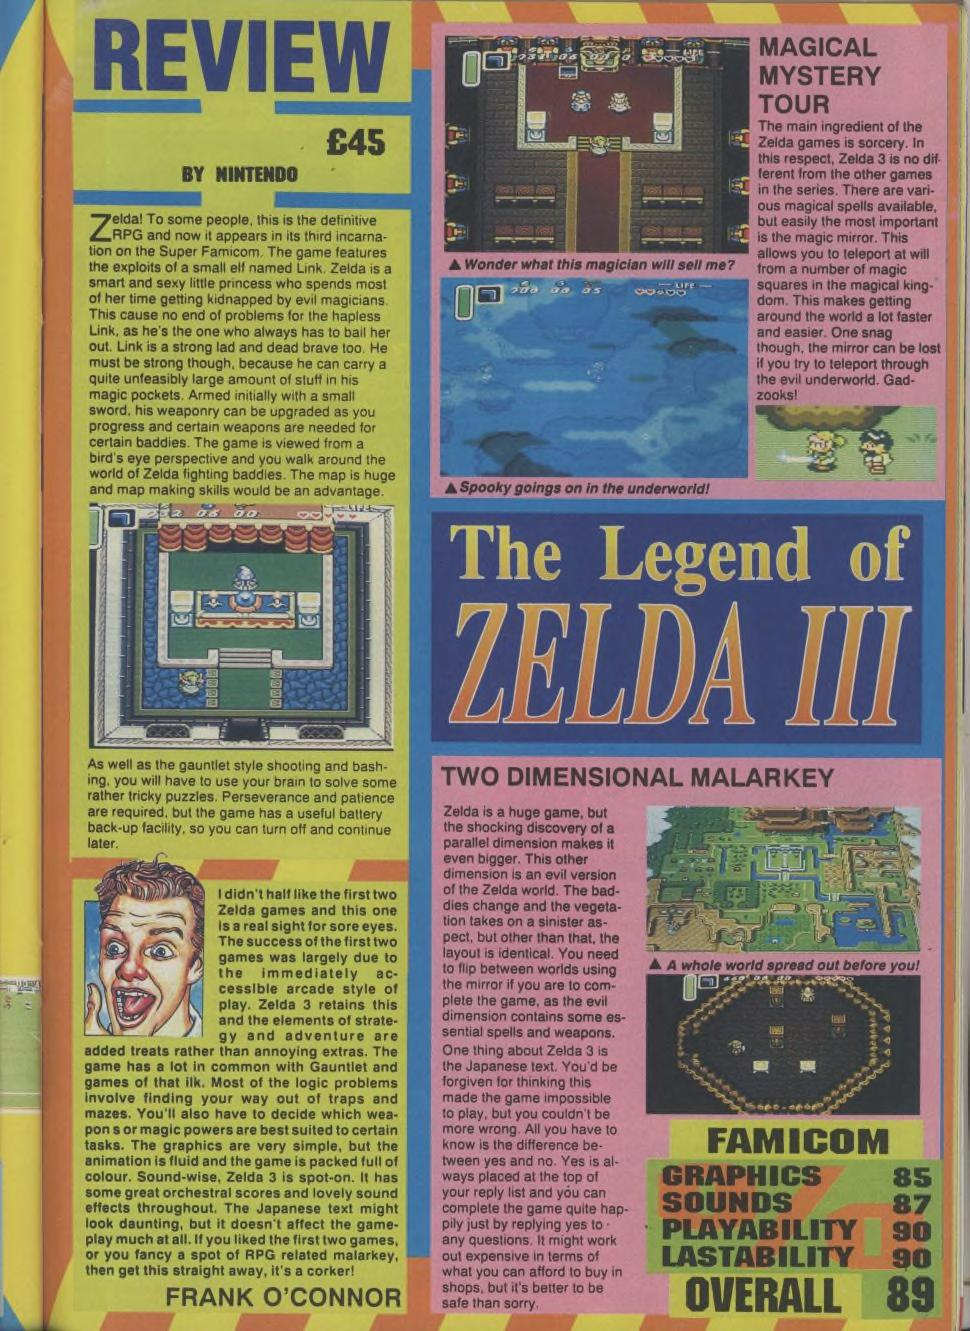 Jogos de vídeo para computador número 123 1992 02 EMAP Publishing GB 0068